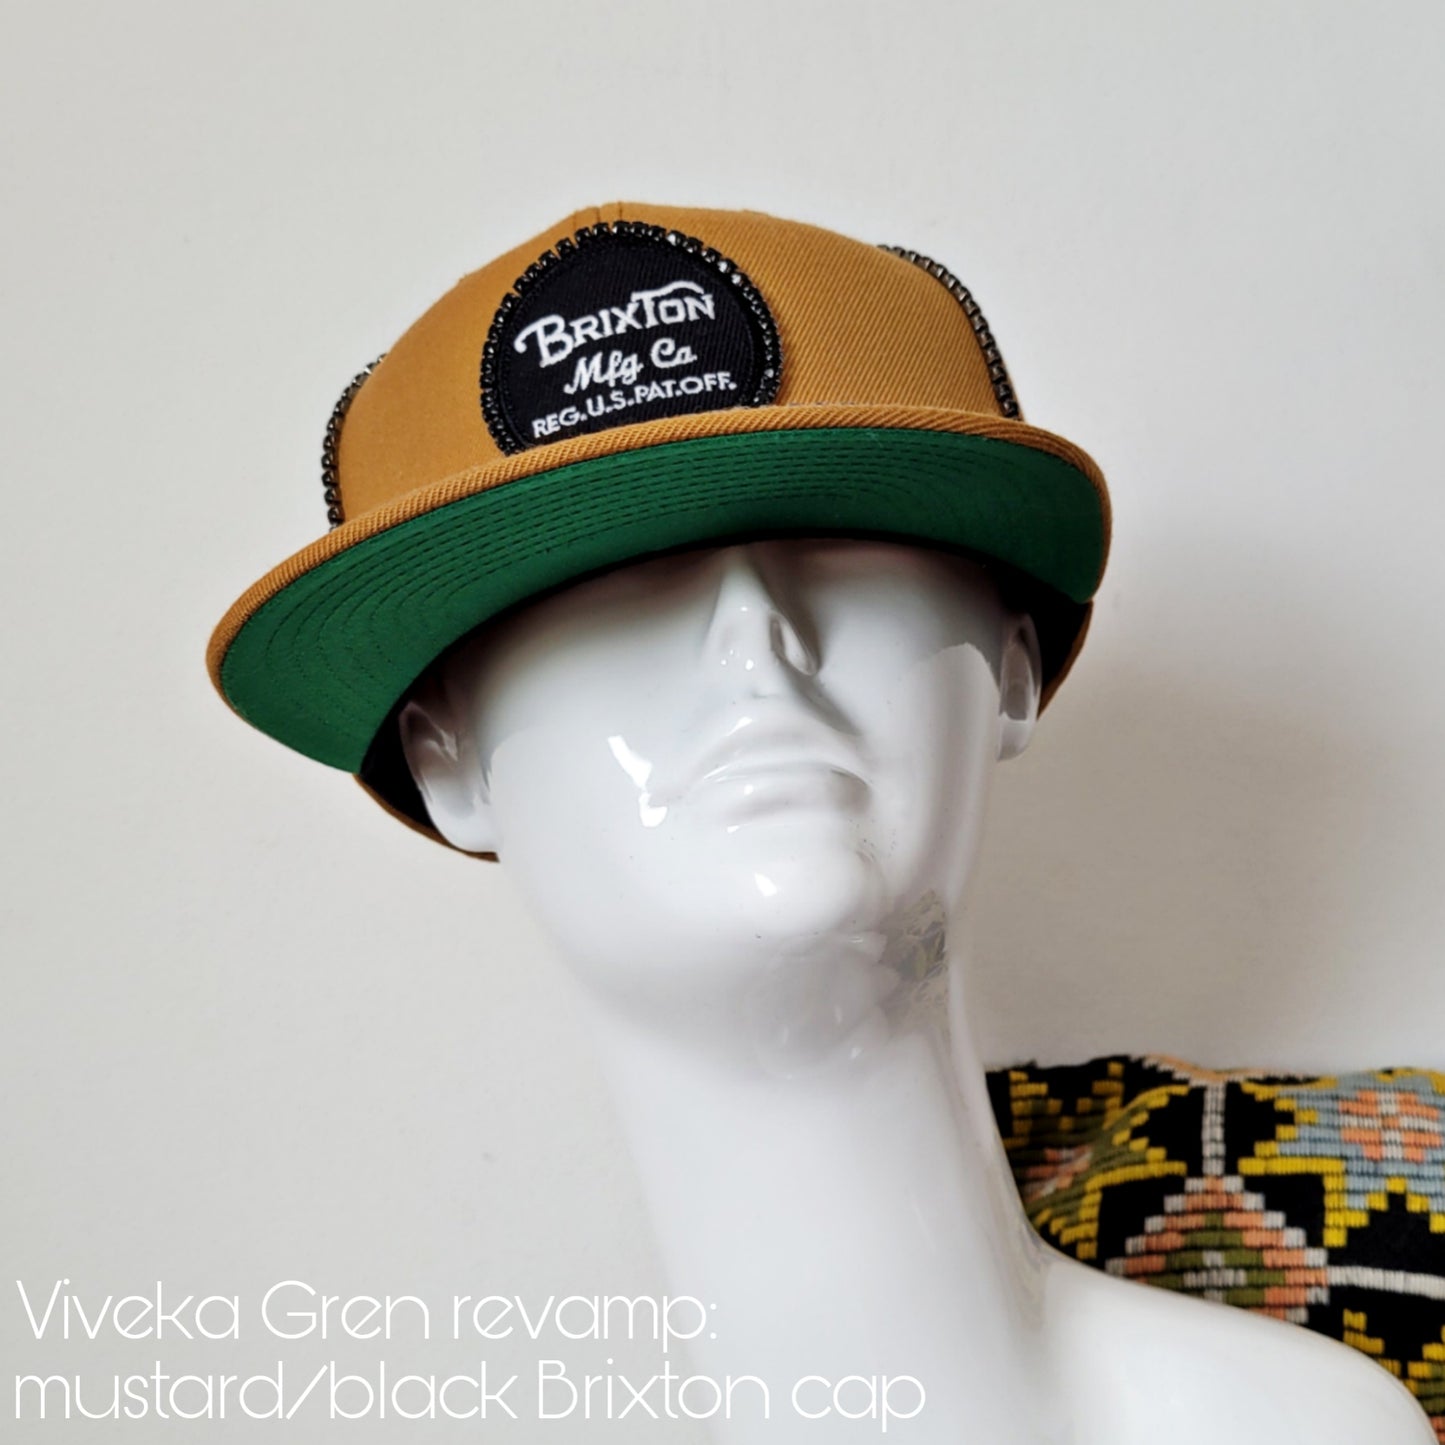 Viveka Gren Revamp: mustard/black Brixton cap